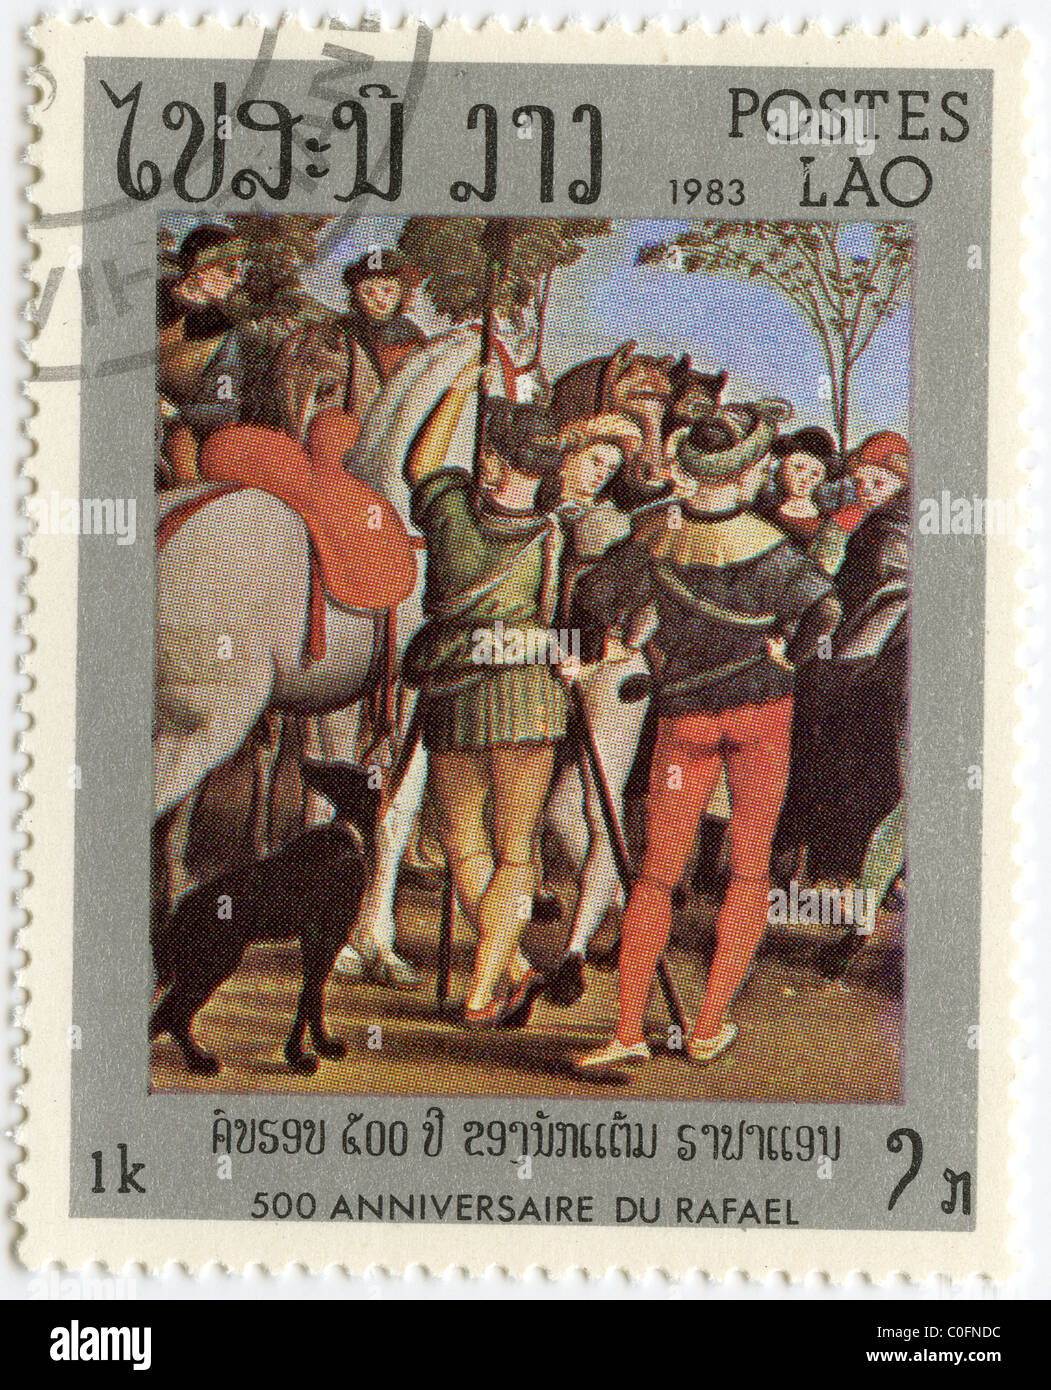 Laos postage stamp Stock Photo